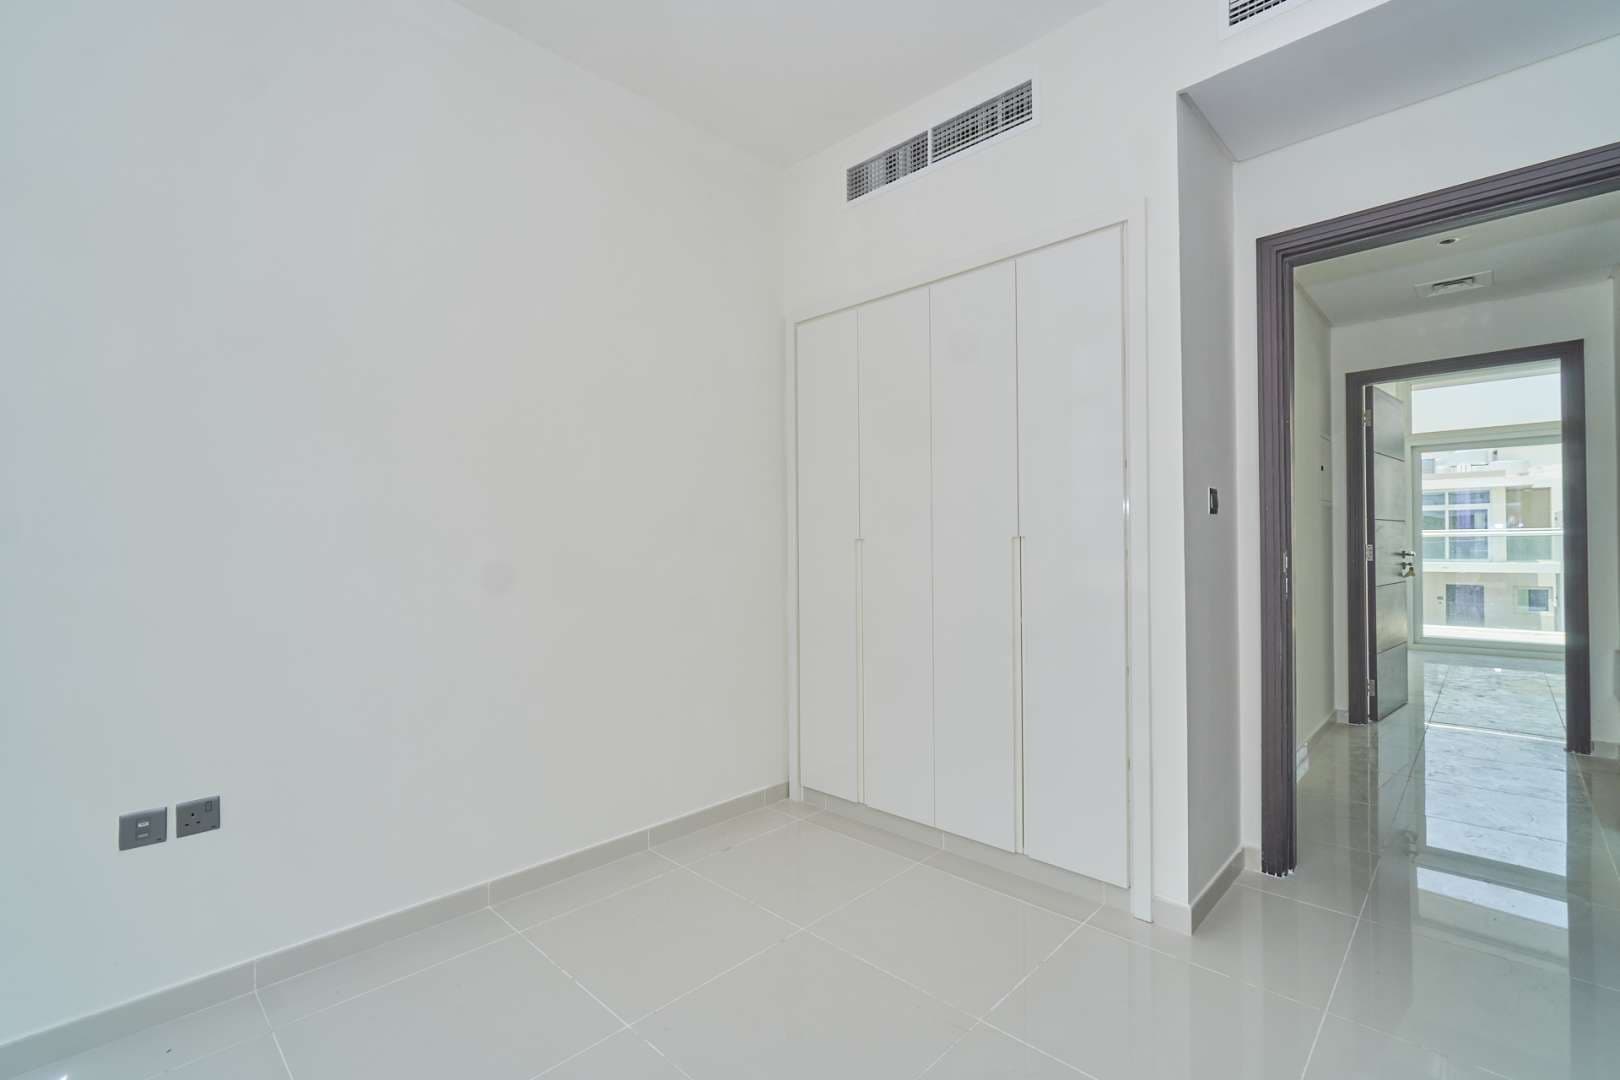 3 Bedroom Townhouse For Rent Albizia Lp07662 23d79daad8d8e400.jpg